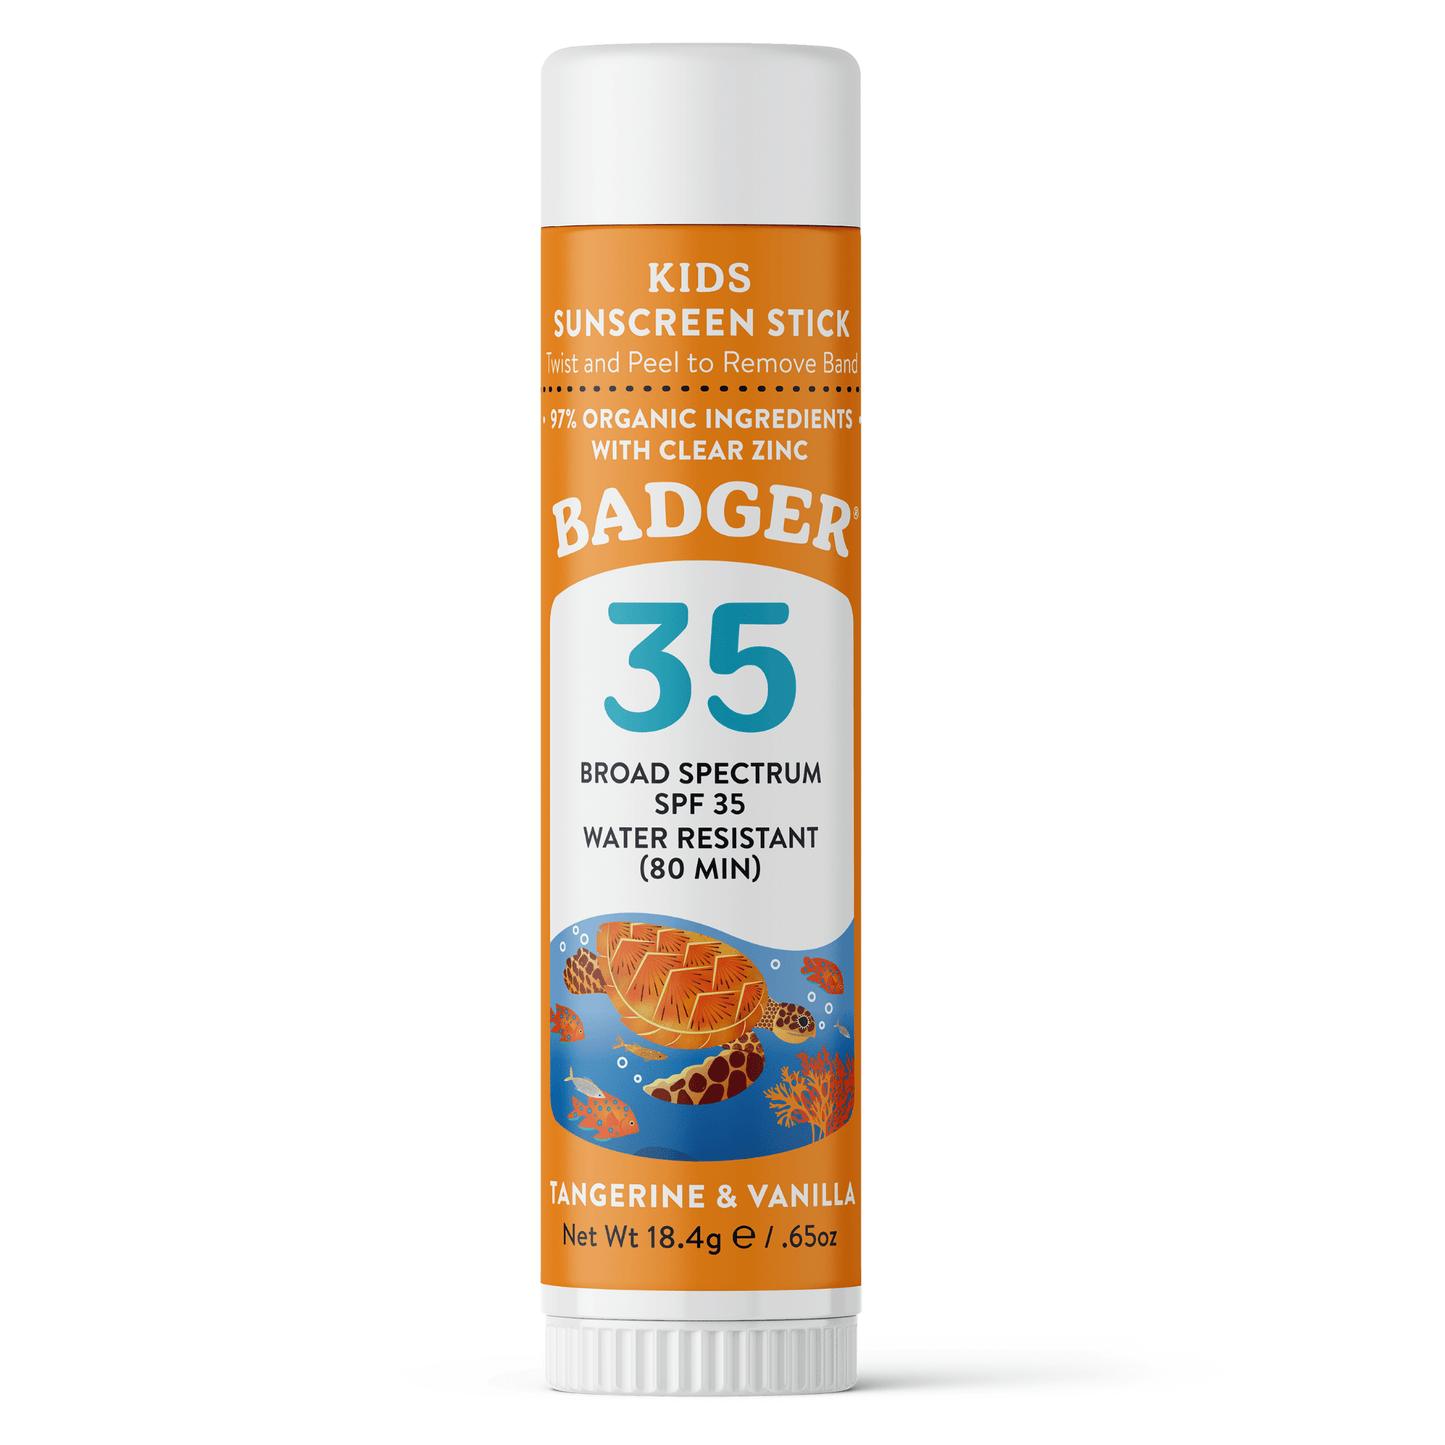 Primary Image of Kids Sunscreen Stick SPF 35